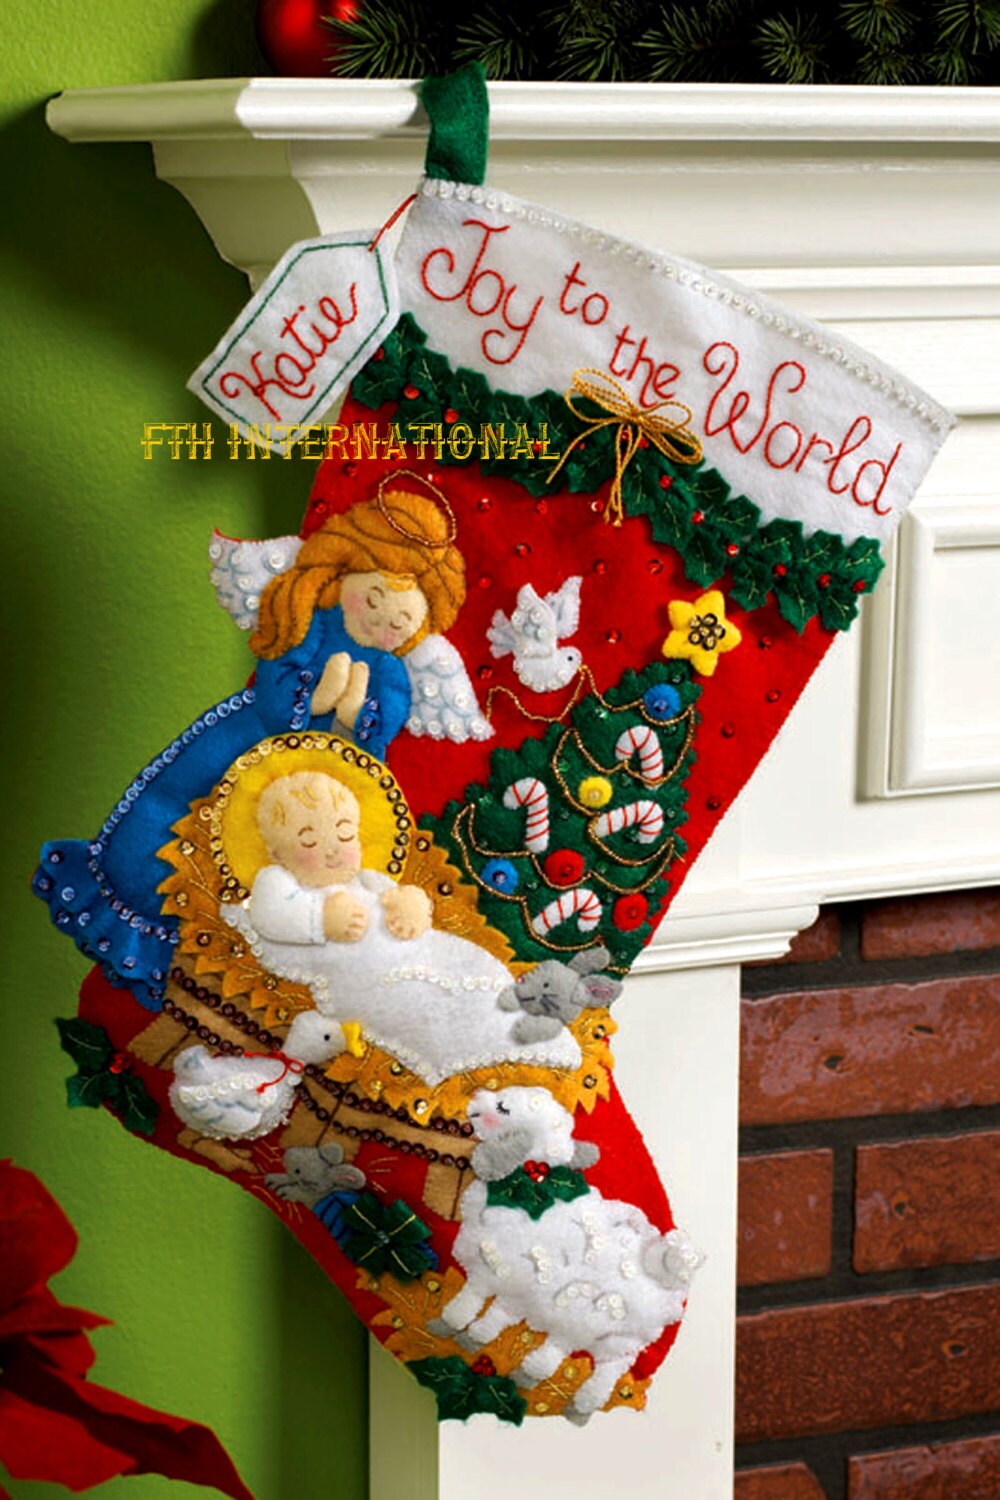 Bucilla Kit: Sugarland Fairy 18 Christmas Stocking Felt Applique Kit 86714  